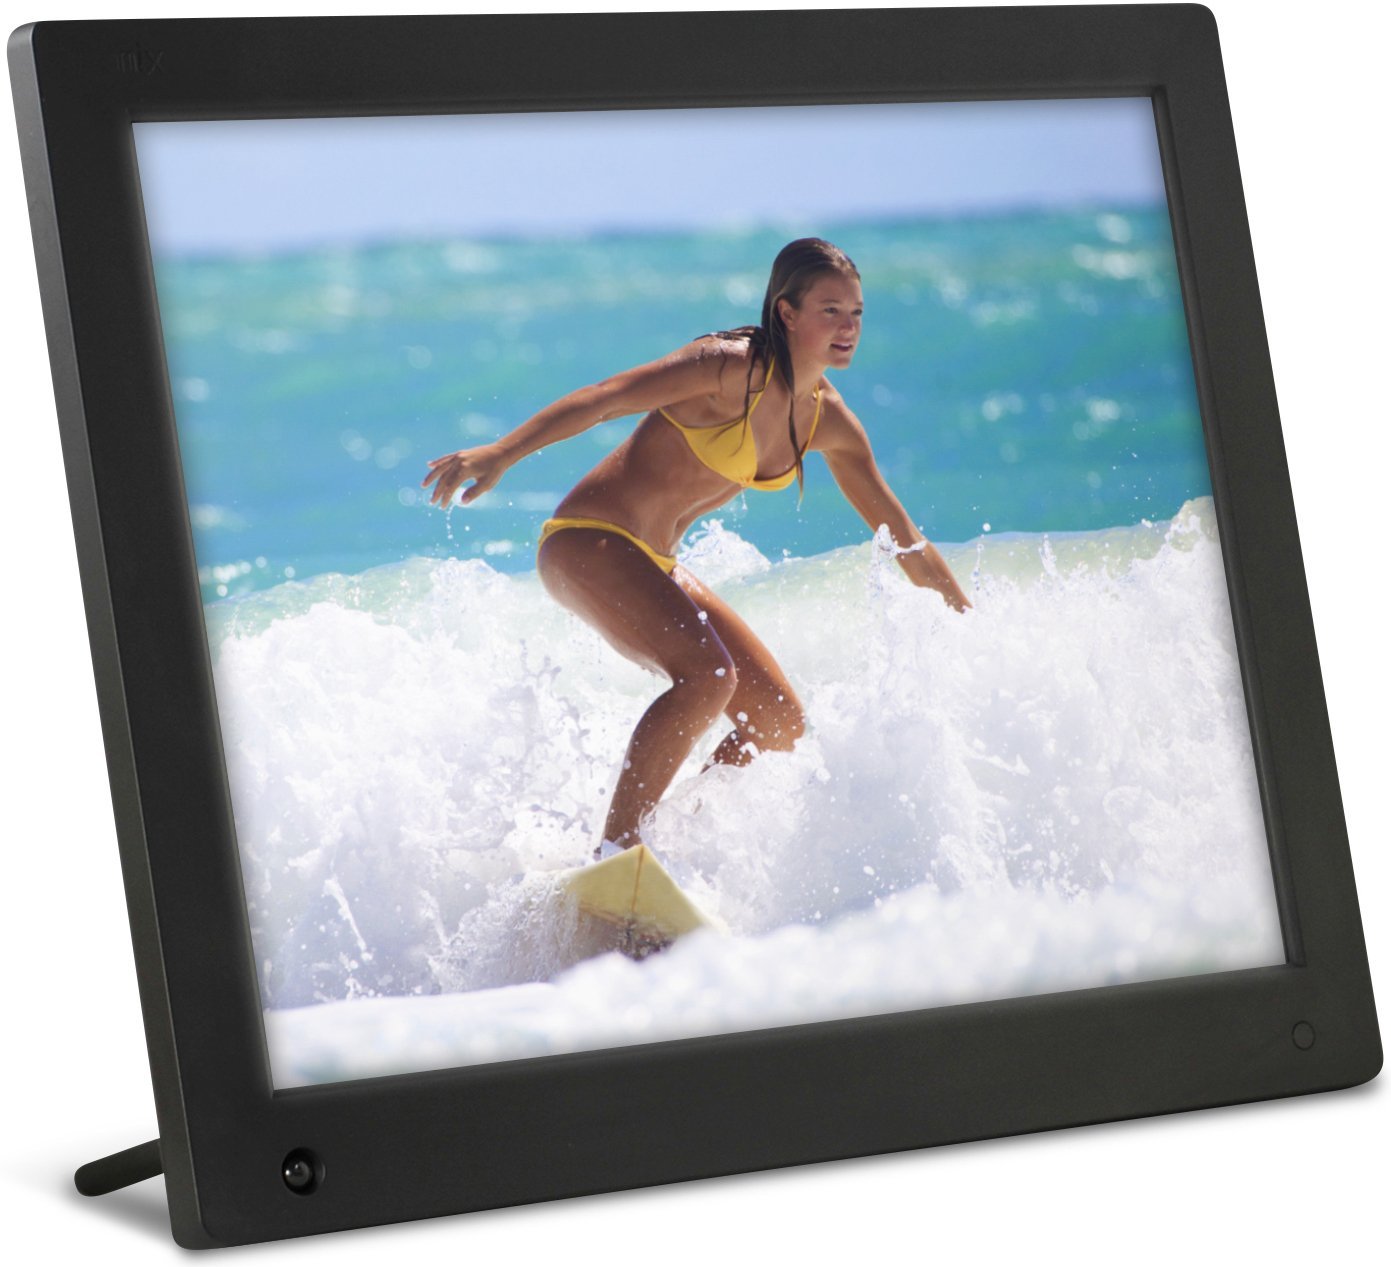 NIX 12 inch Hi-Res Digital Photo Frame with Motion Sensor Review